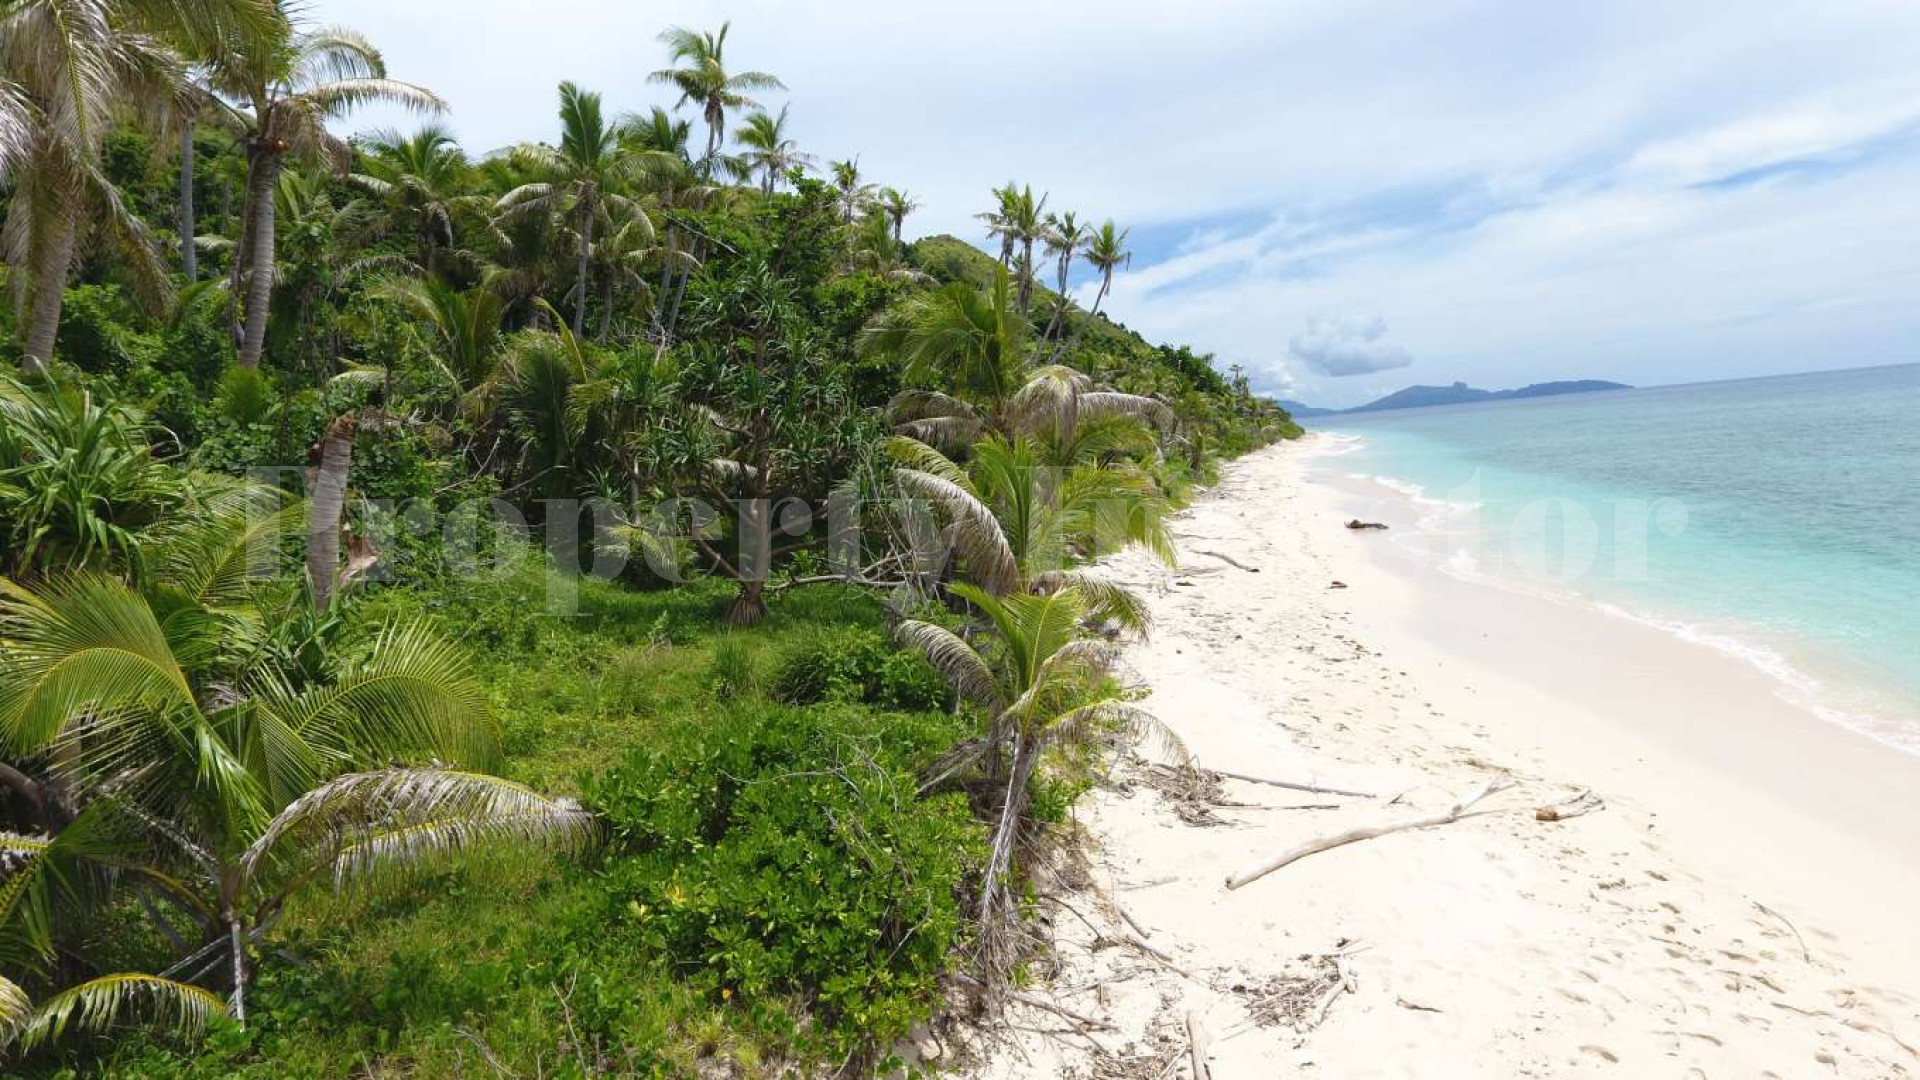 70 Acre Private Tropical Island for Sale in Fiji